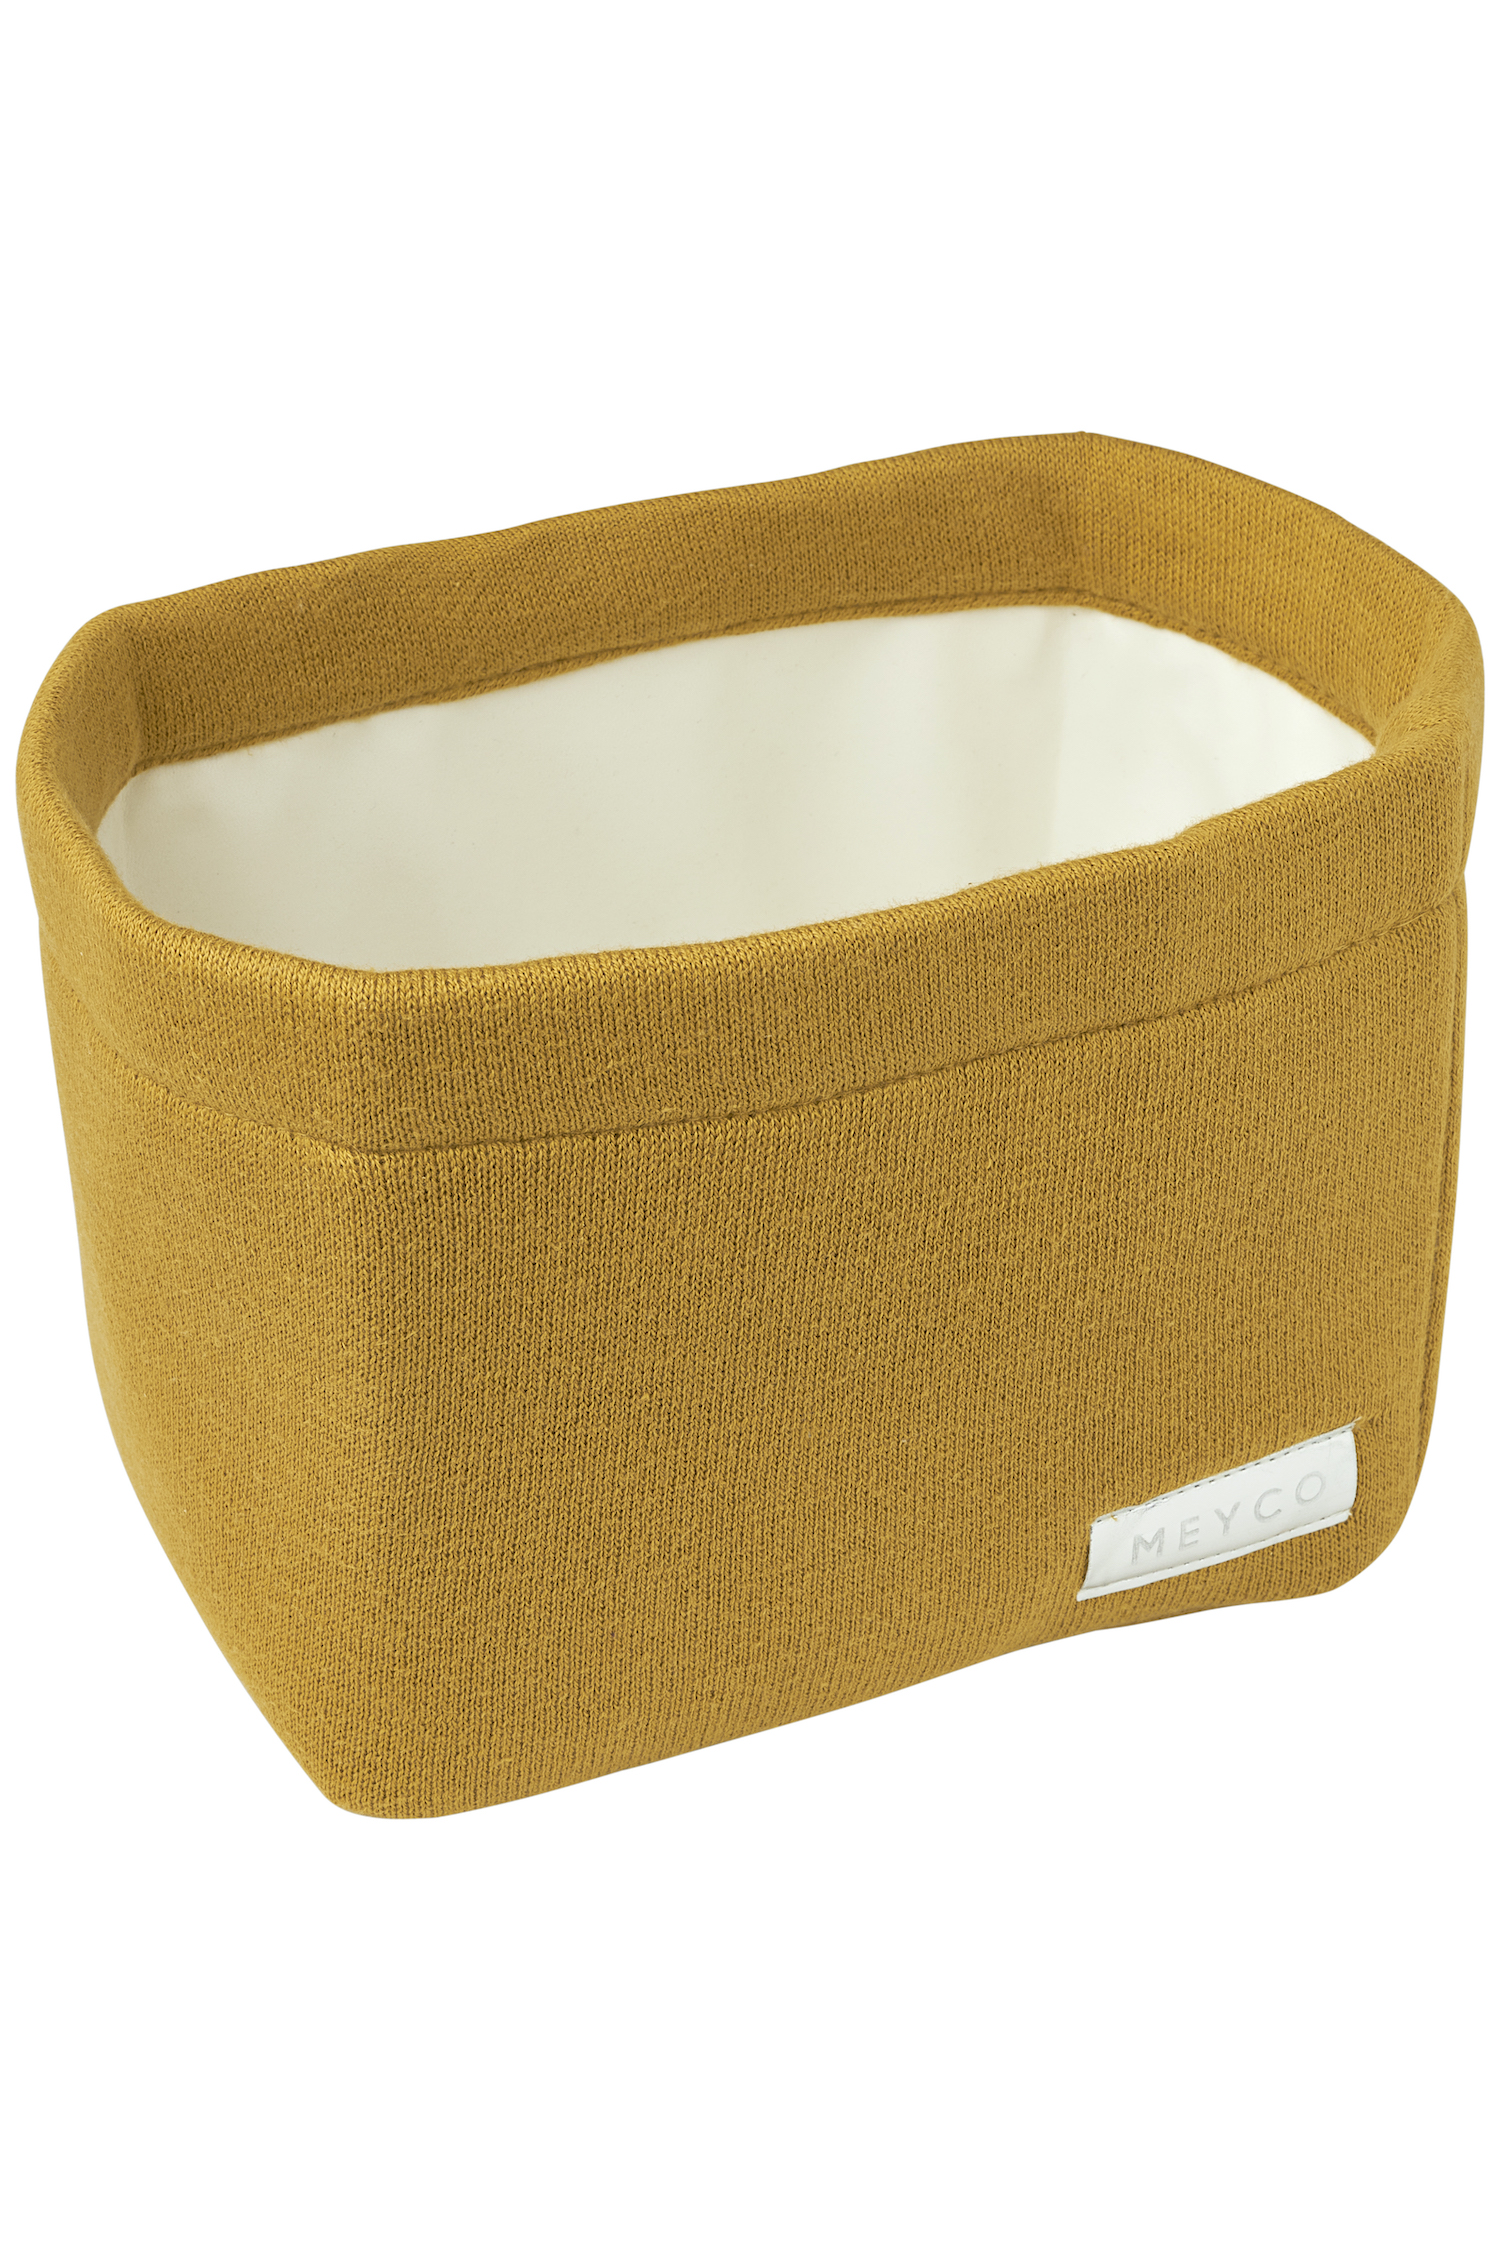 Commodemand Small Knit Basic - Honey Gold - 21x16xh16cm